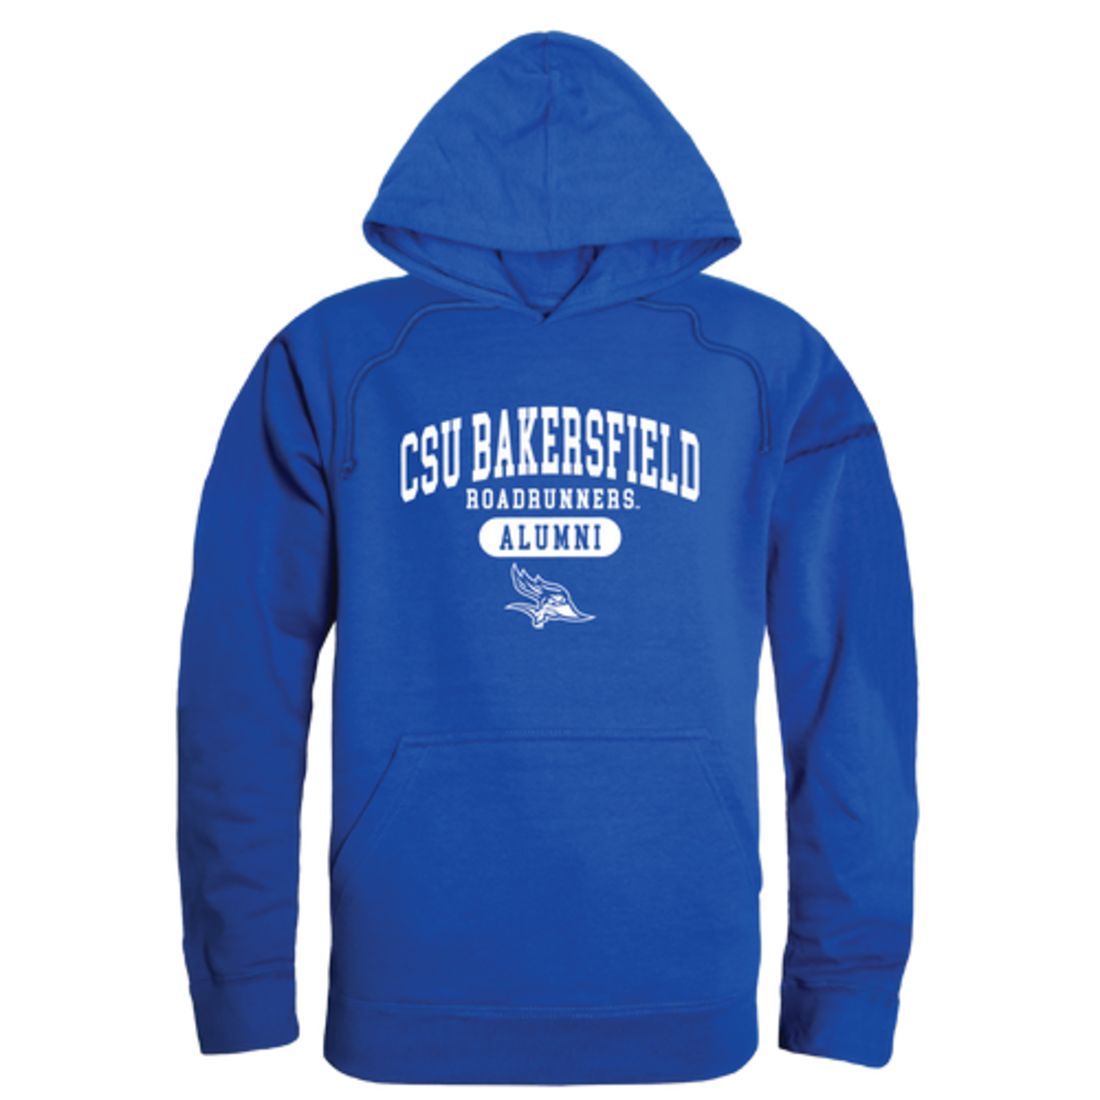 CSUB California State University Bakersfield Roadrunners Alumni Fleece Hoodie Sweatshirts Heather Grey-Campus-Wardrobe